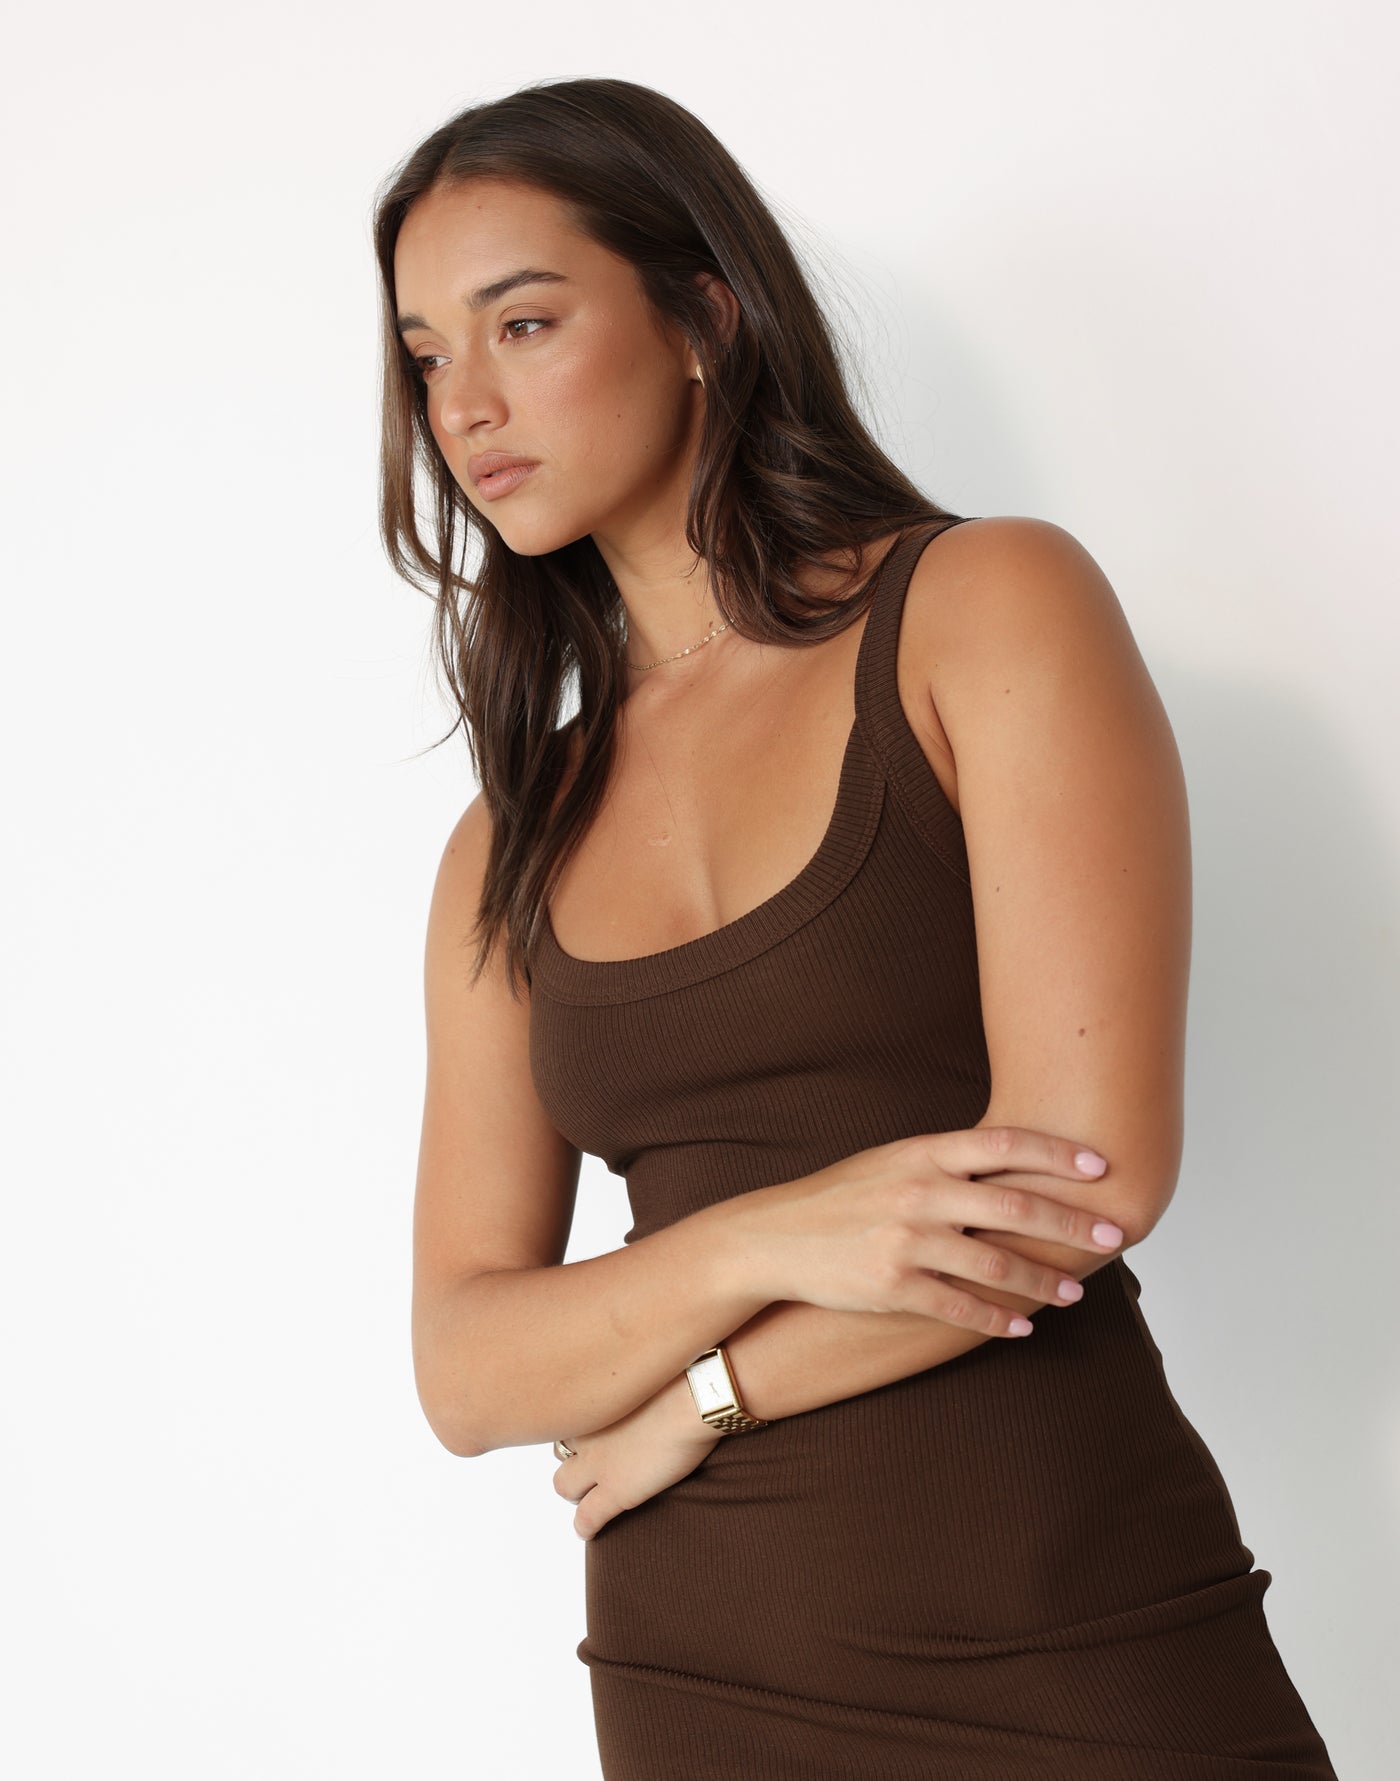 Skyler Mini Dress (Chocolate) - Ribbed Stretch Jersey Round Neck Mini Dress - Women's Dress - Charcoal Clothing